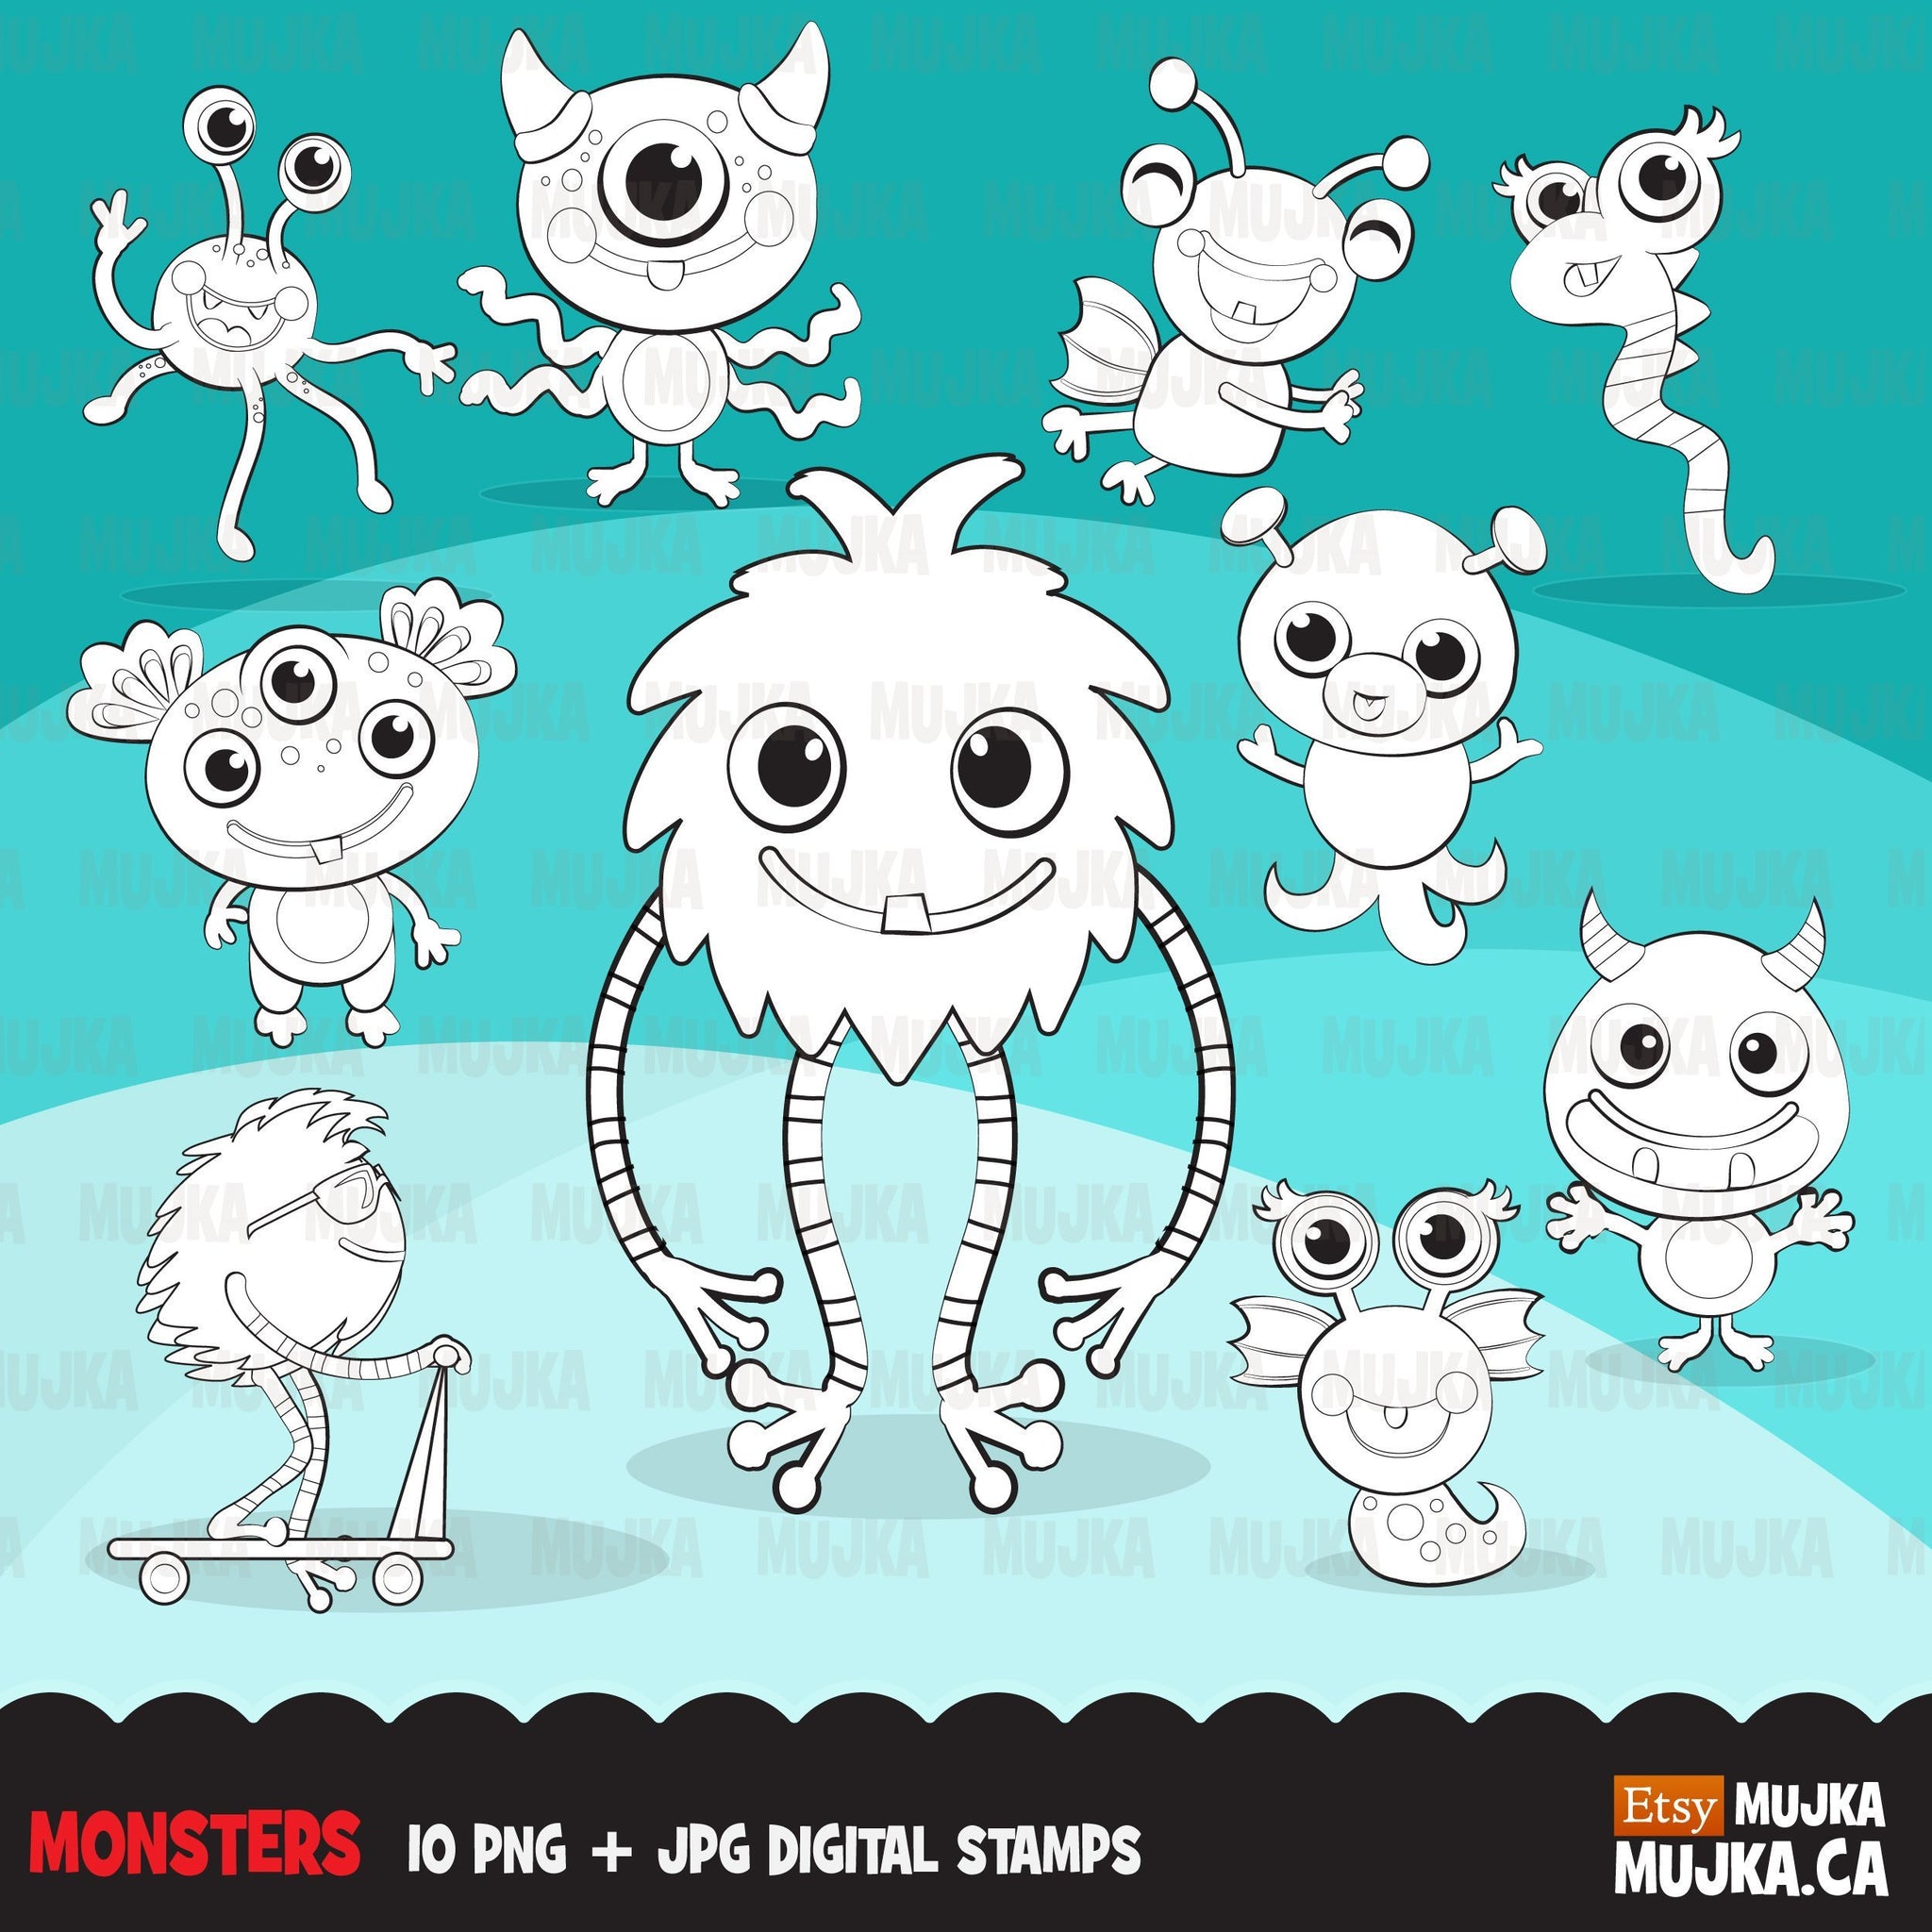 Monsters Digital Stamps